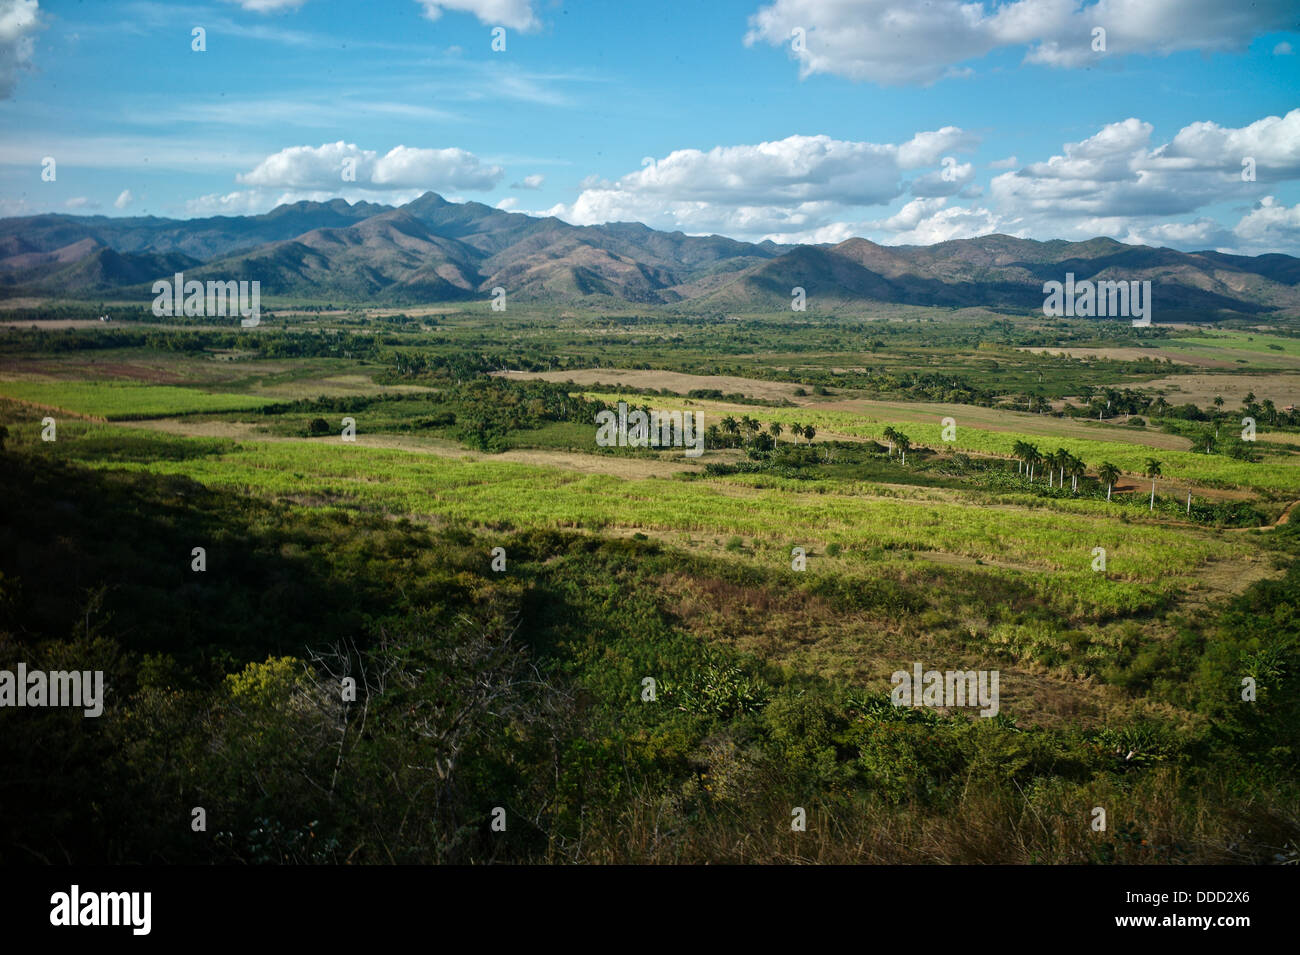 A view of sugar cane in the Valle de los Ingenios, Cuba. Stock Photo